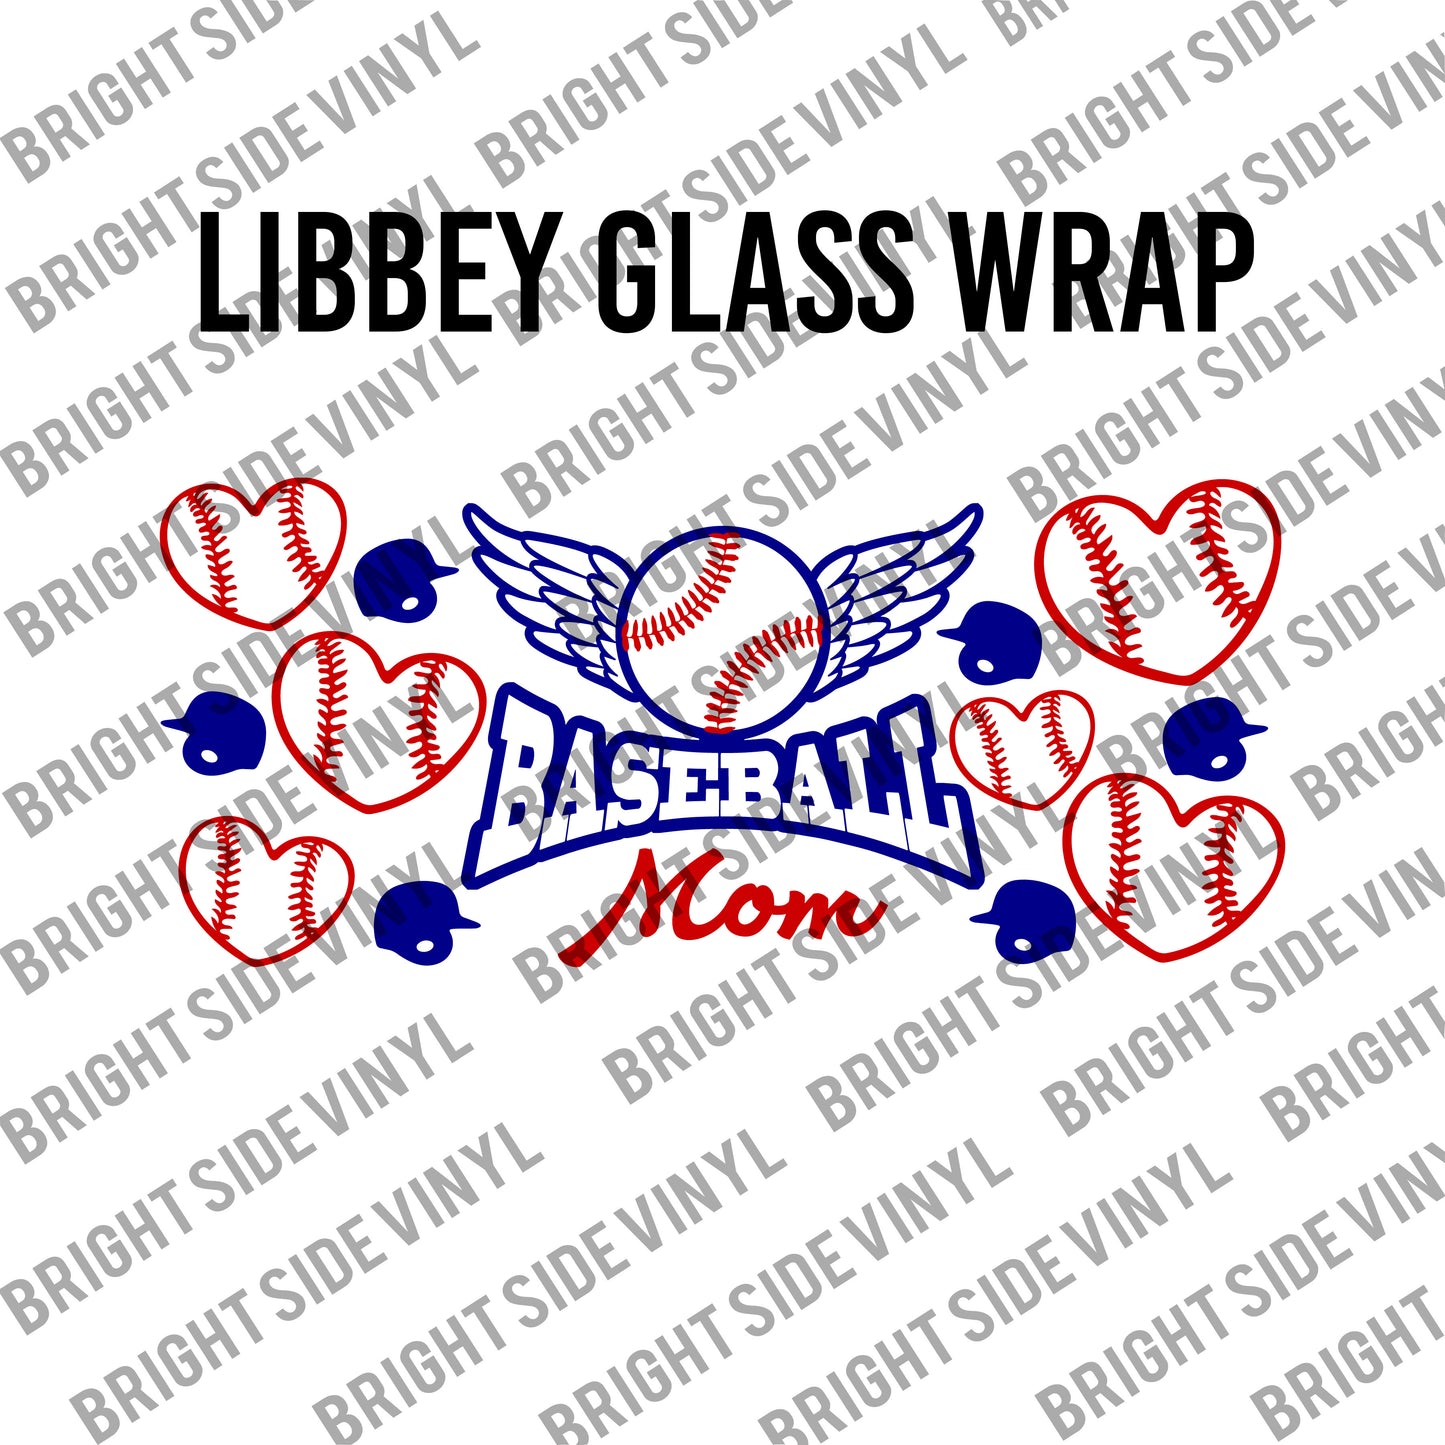 Baseball Mom (Libbey Glass Wrap)